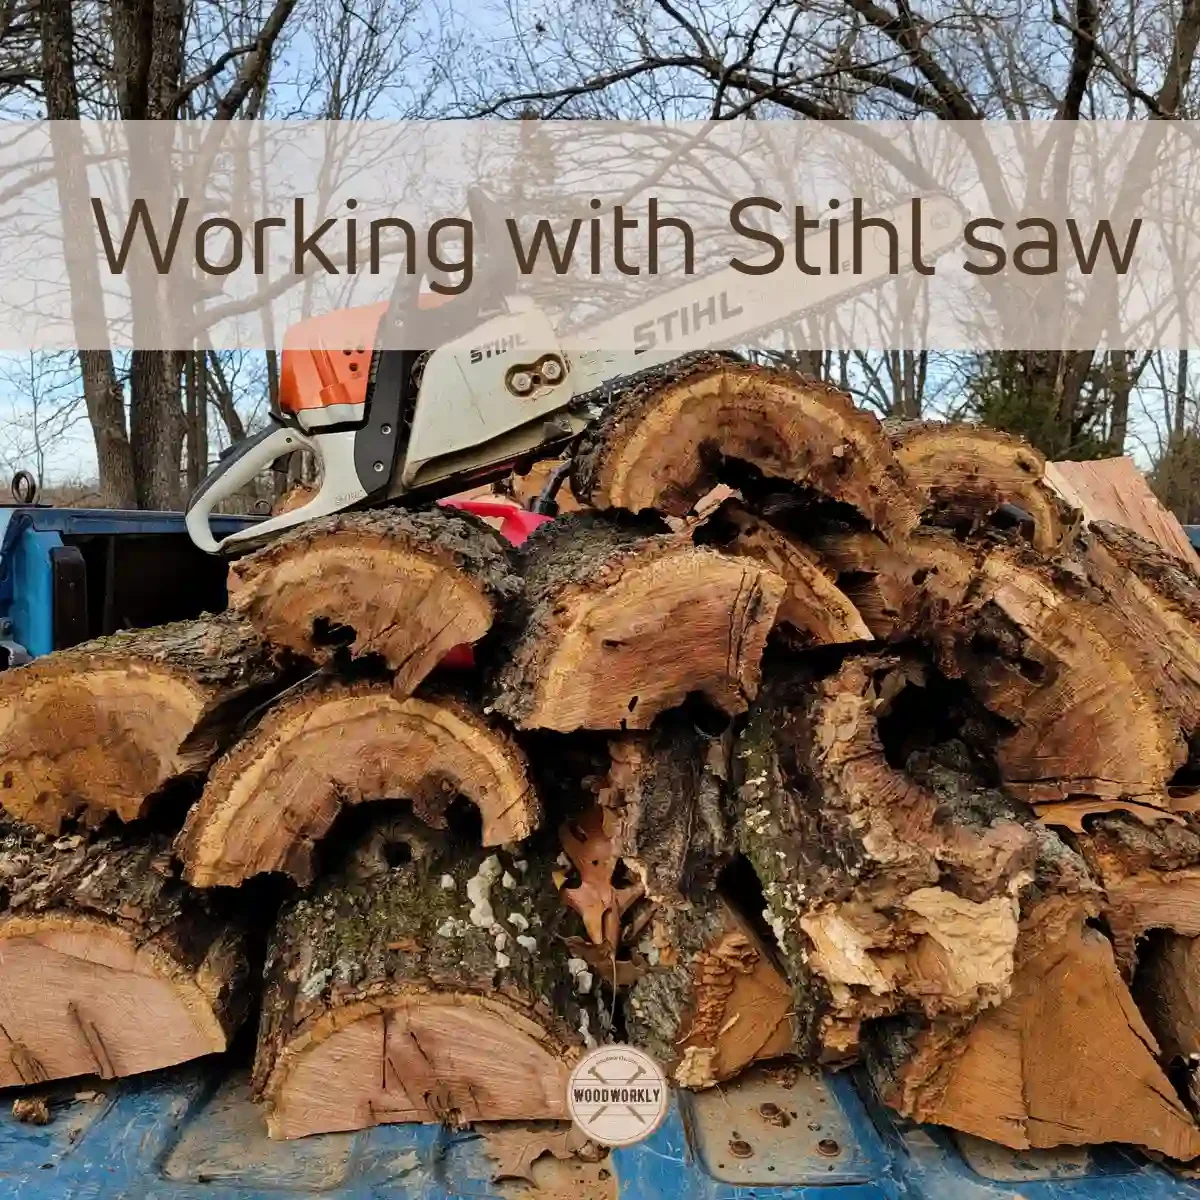 Working with Stihl saw